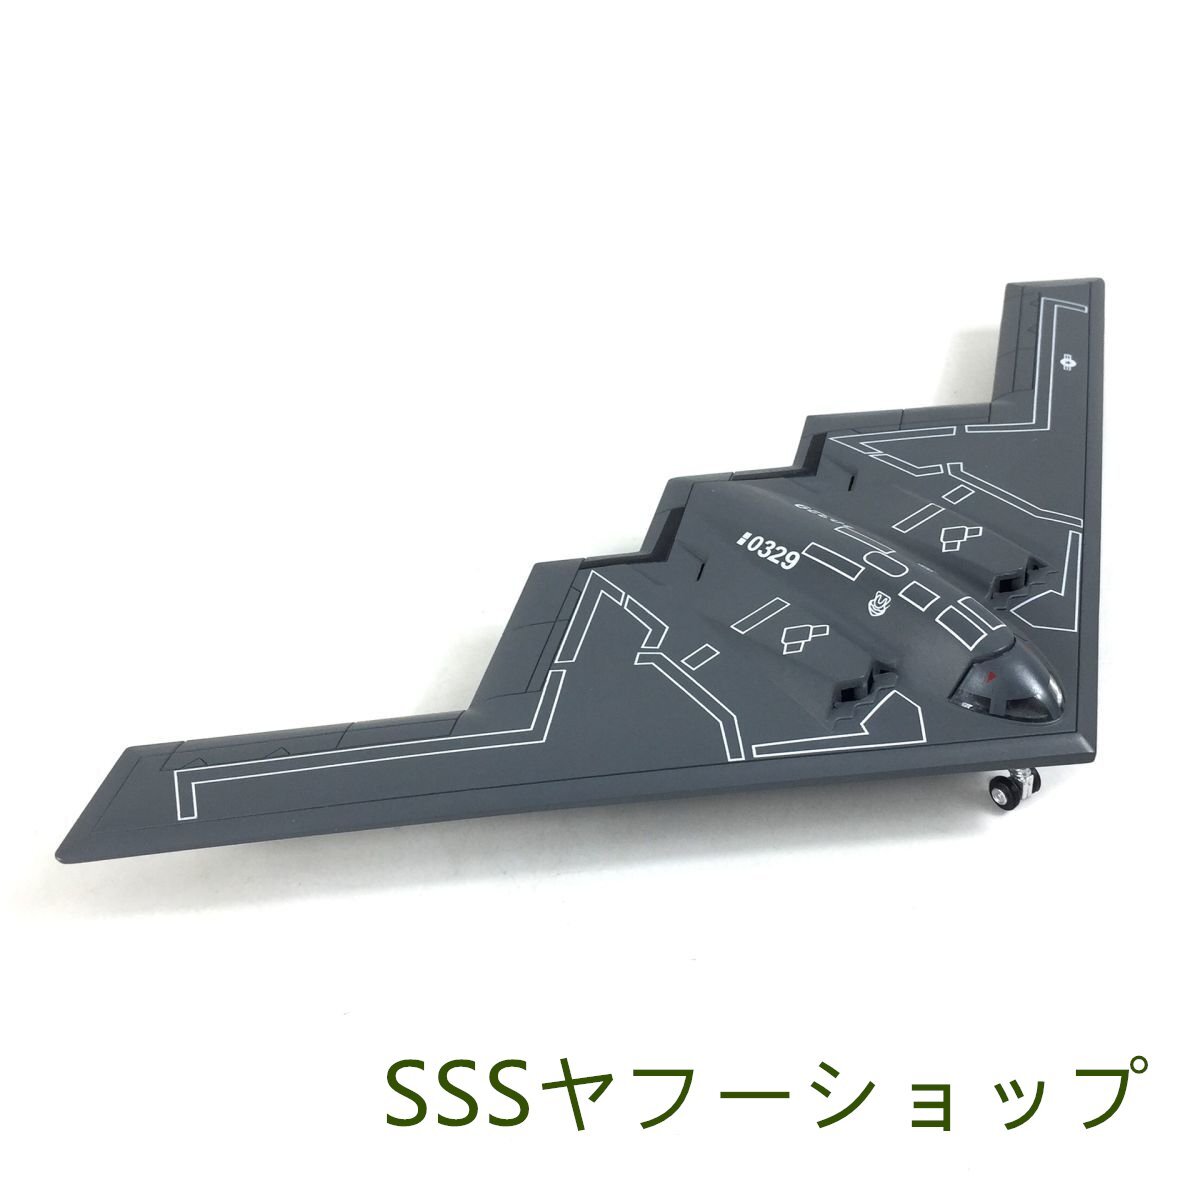 B-2ステルス戦略爆撃機1/200スケールダイキャスト金属モデル戦闘_画像9